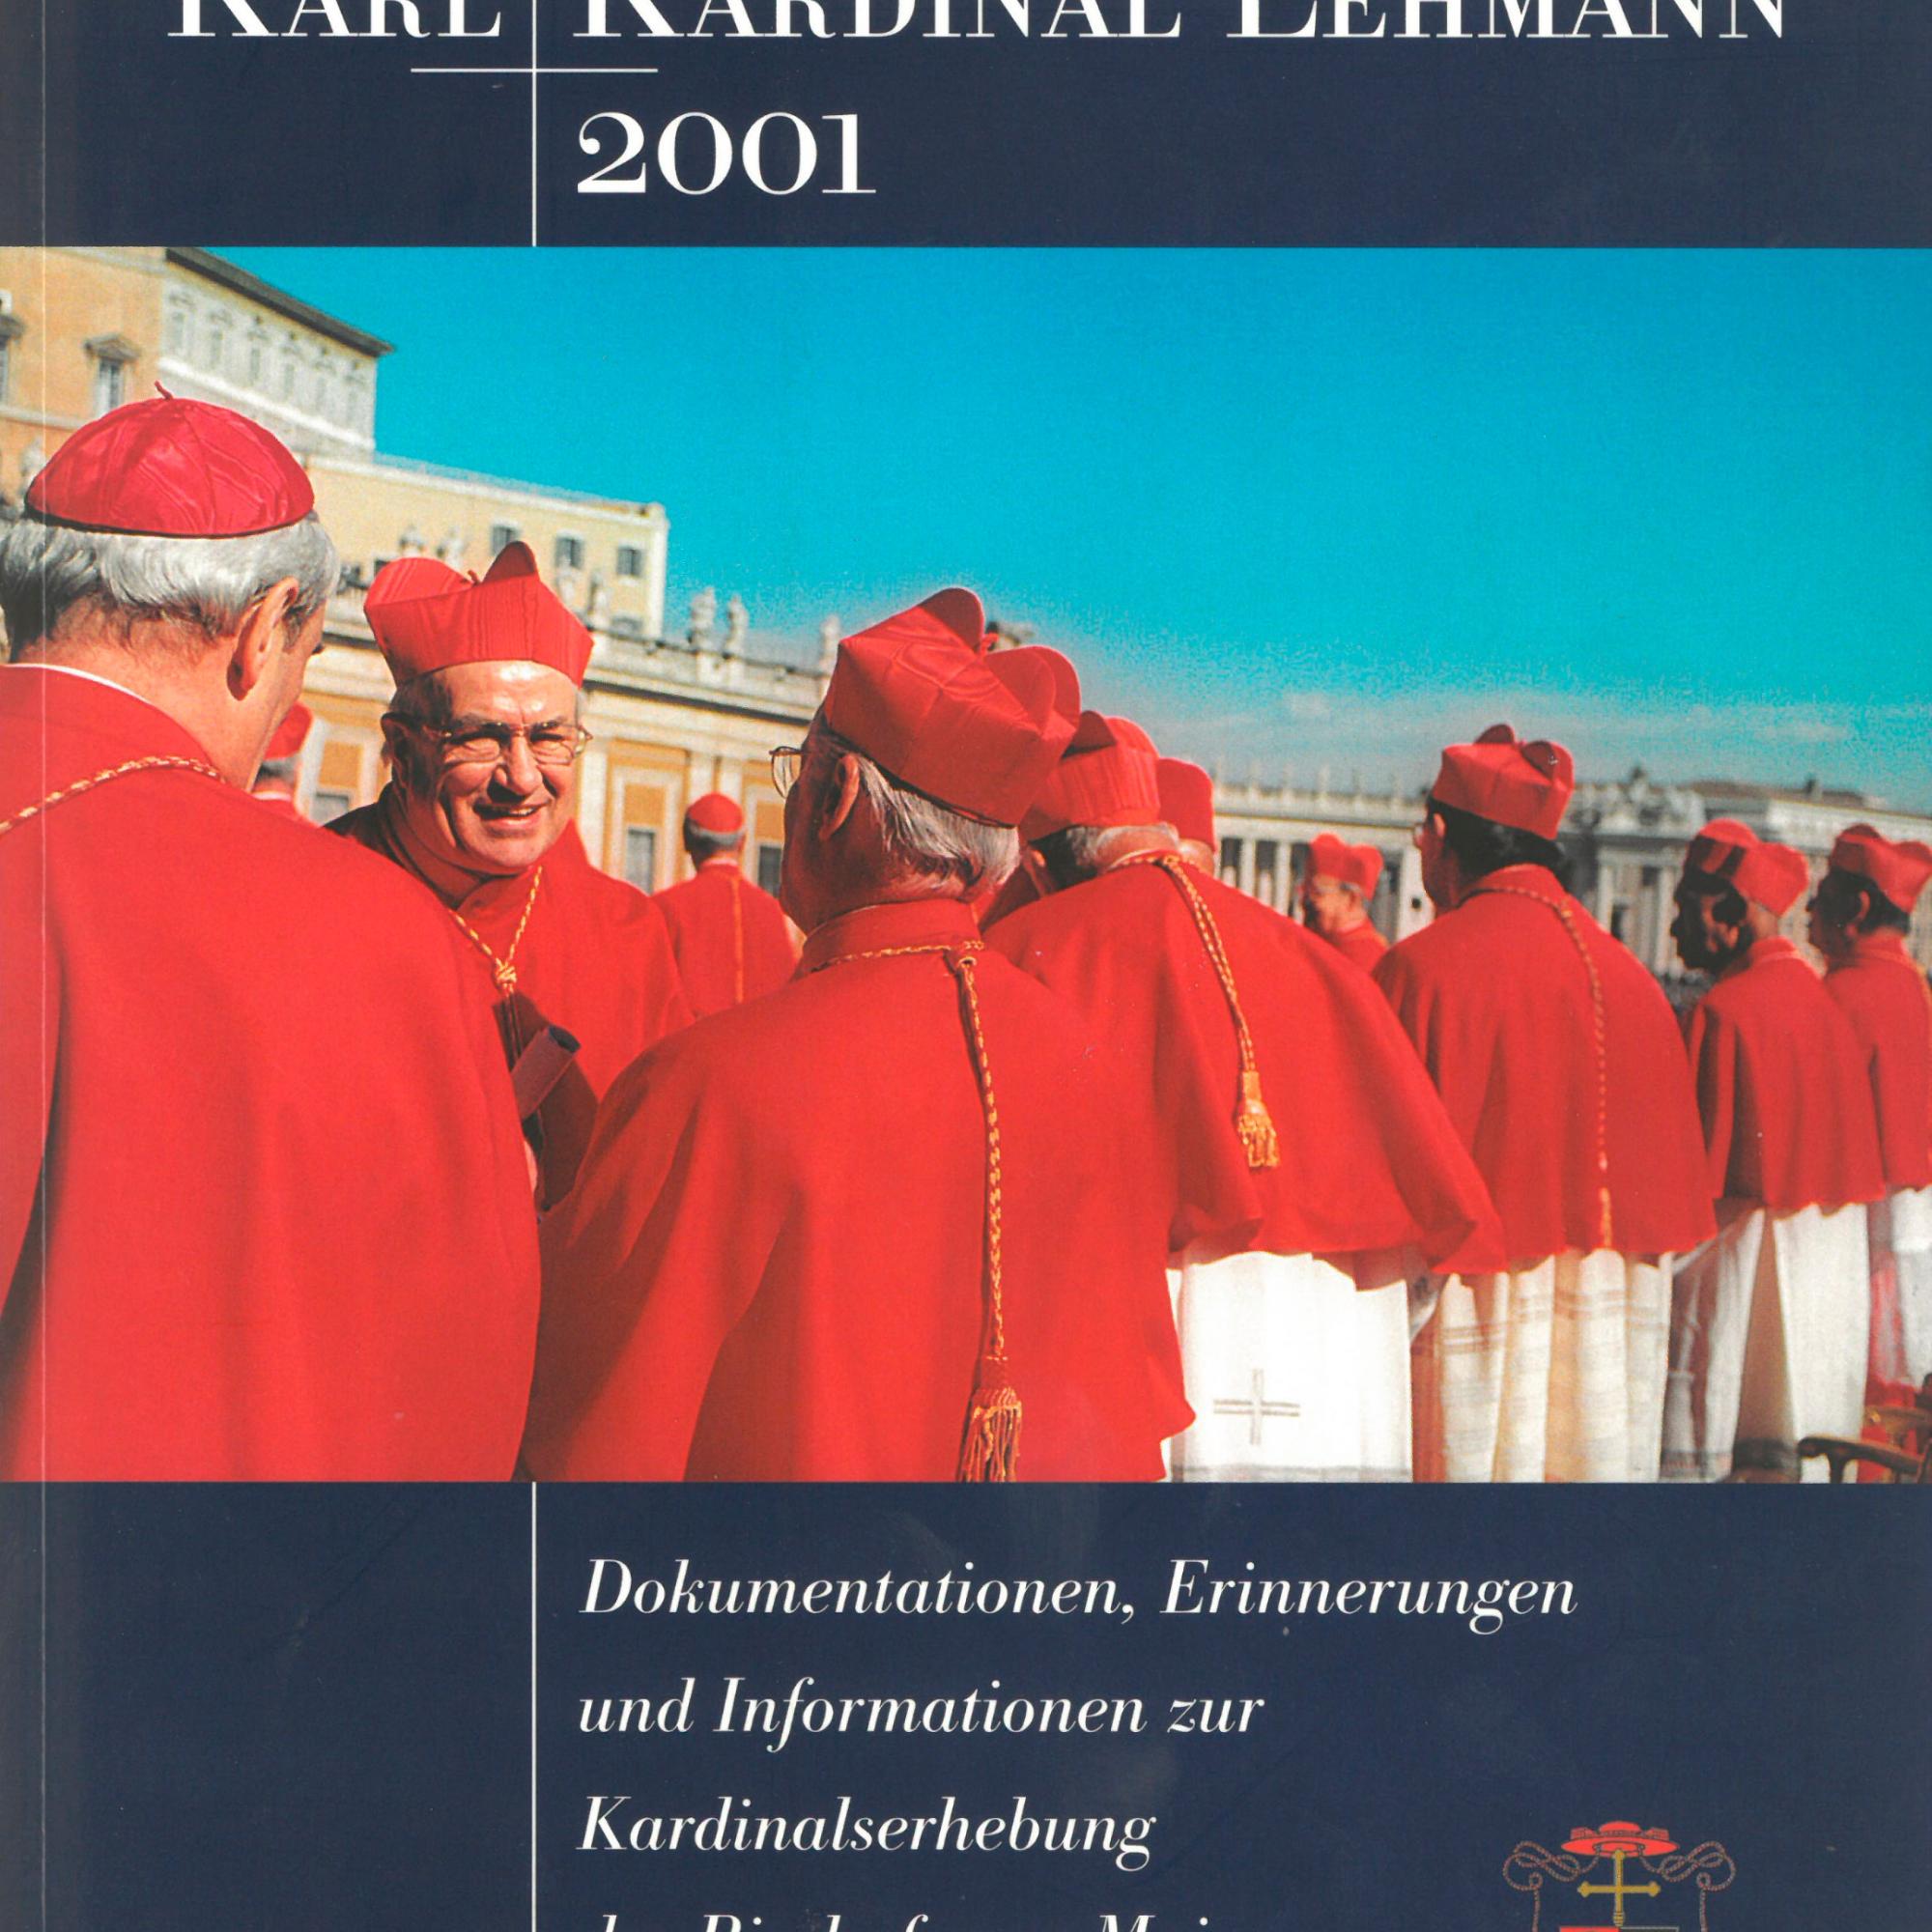 Karl Kardinal Lehmann 2001